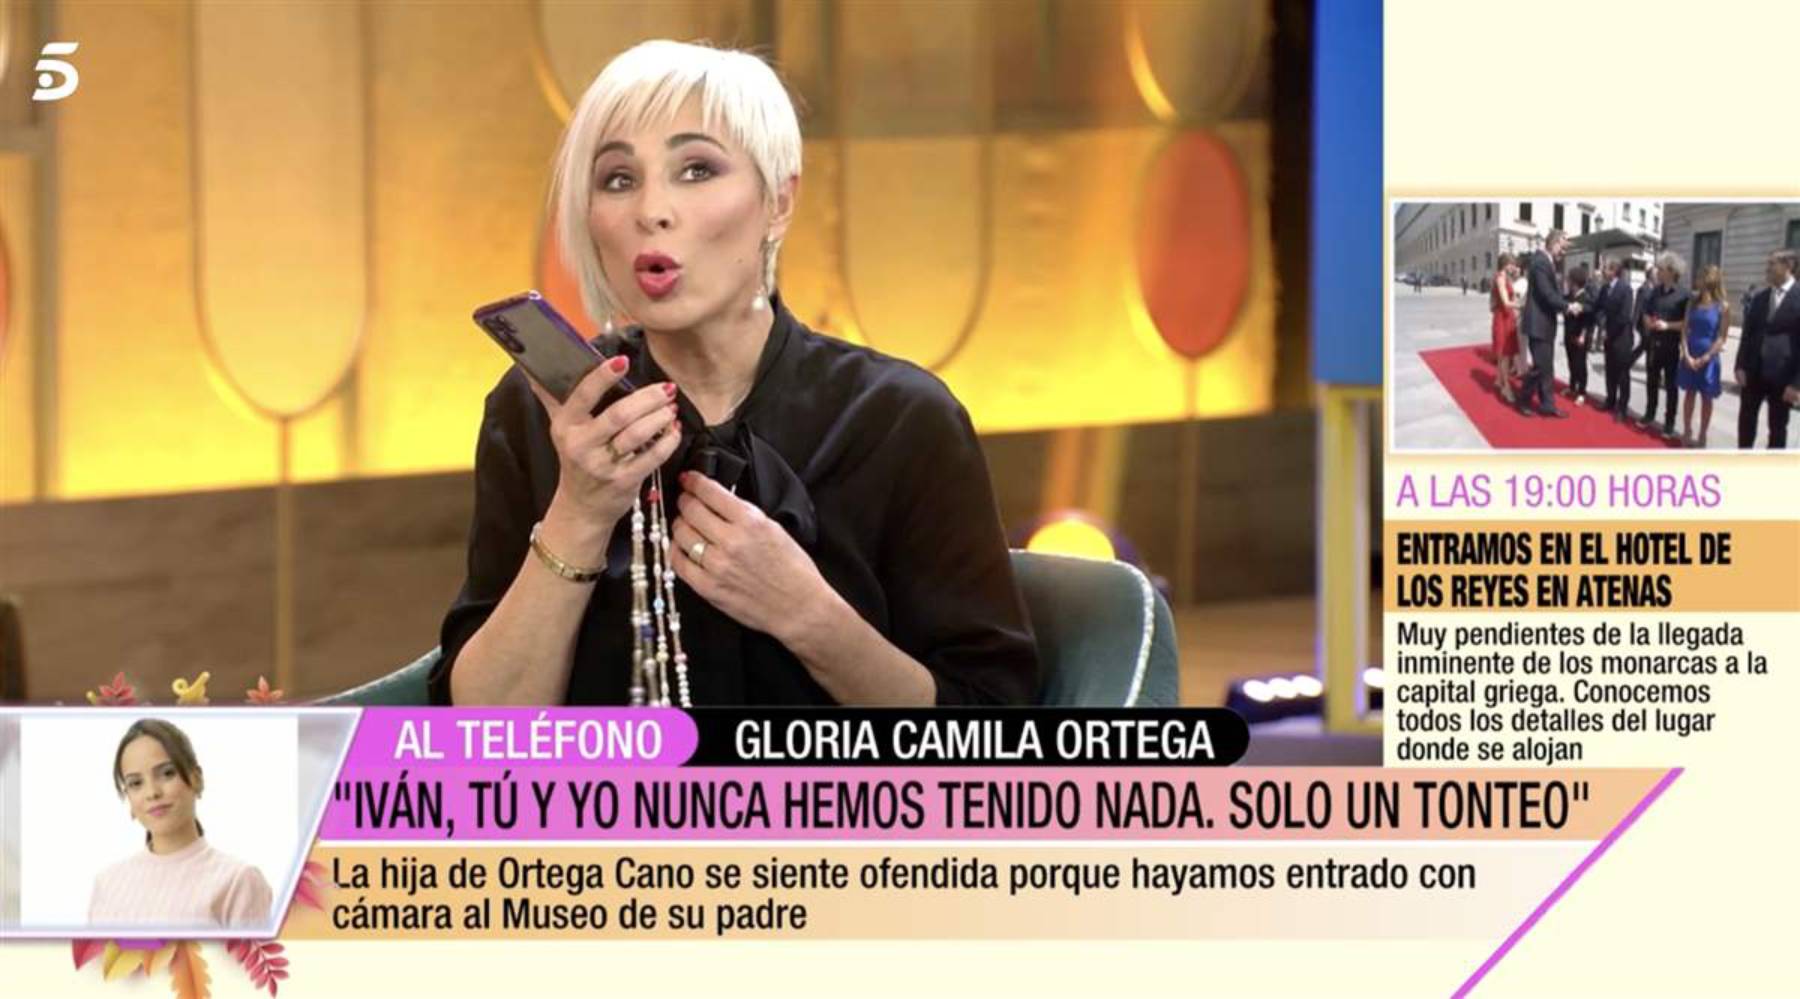 Ana María Aldón en 'Fiesta' / Gtres